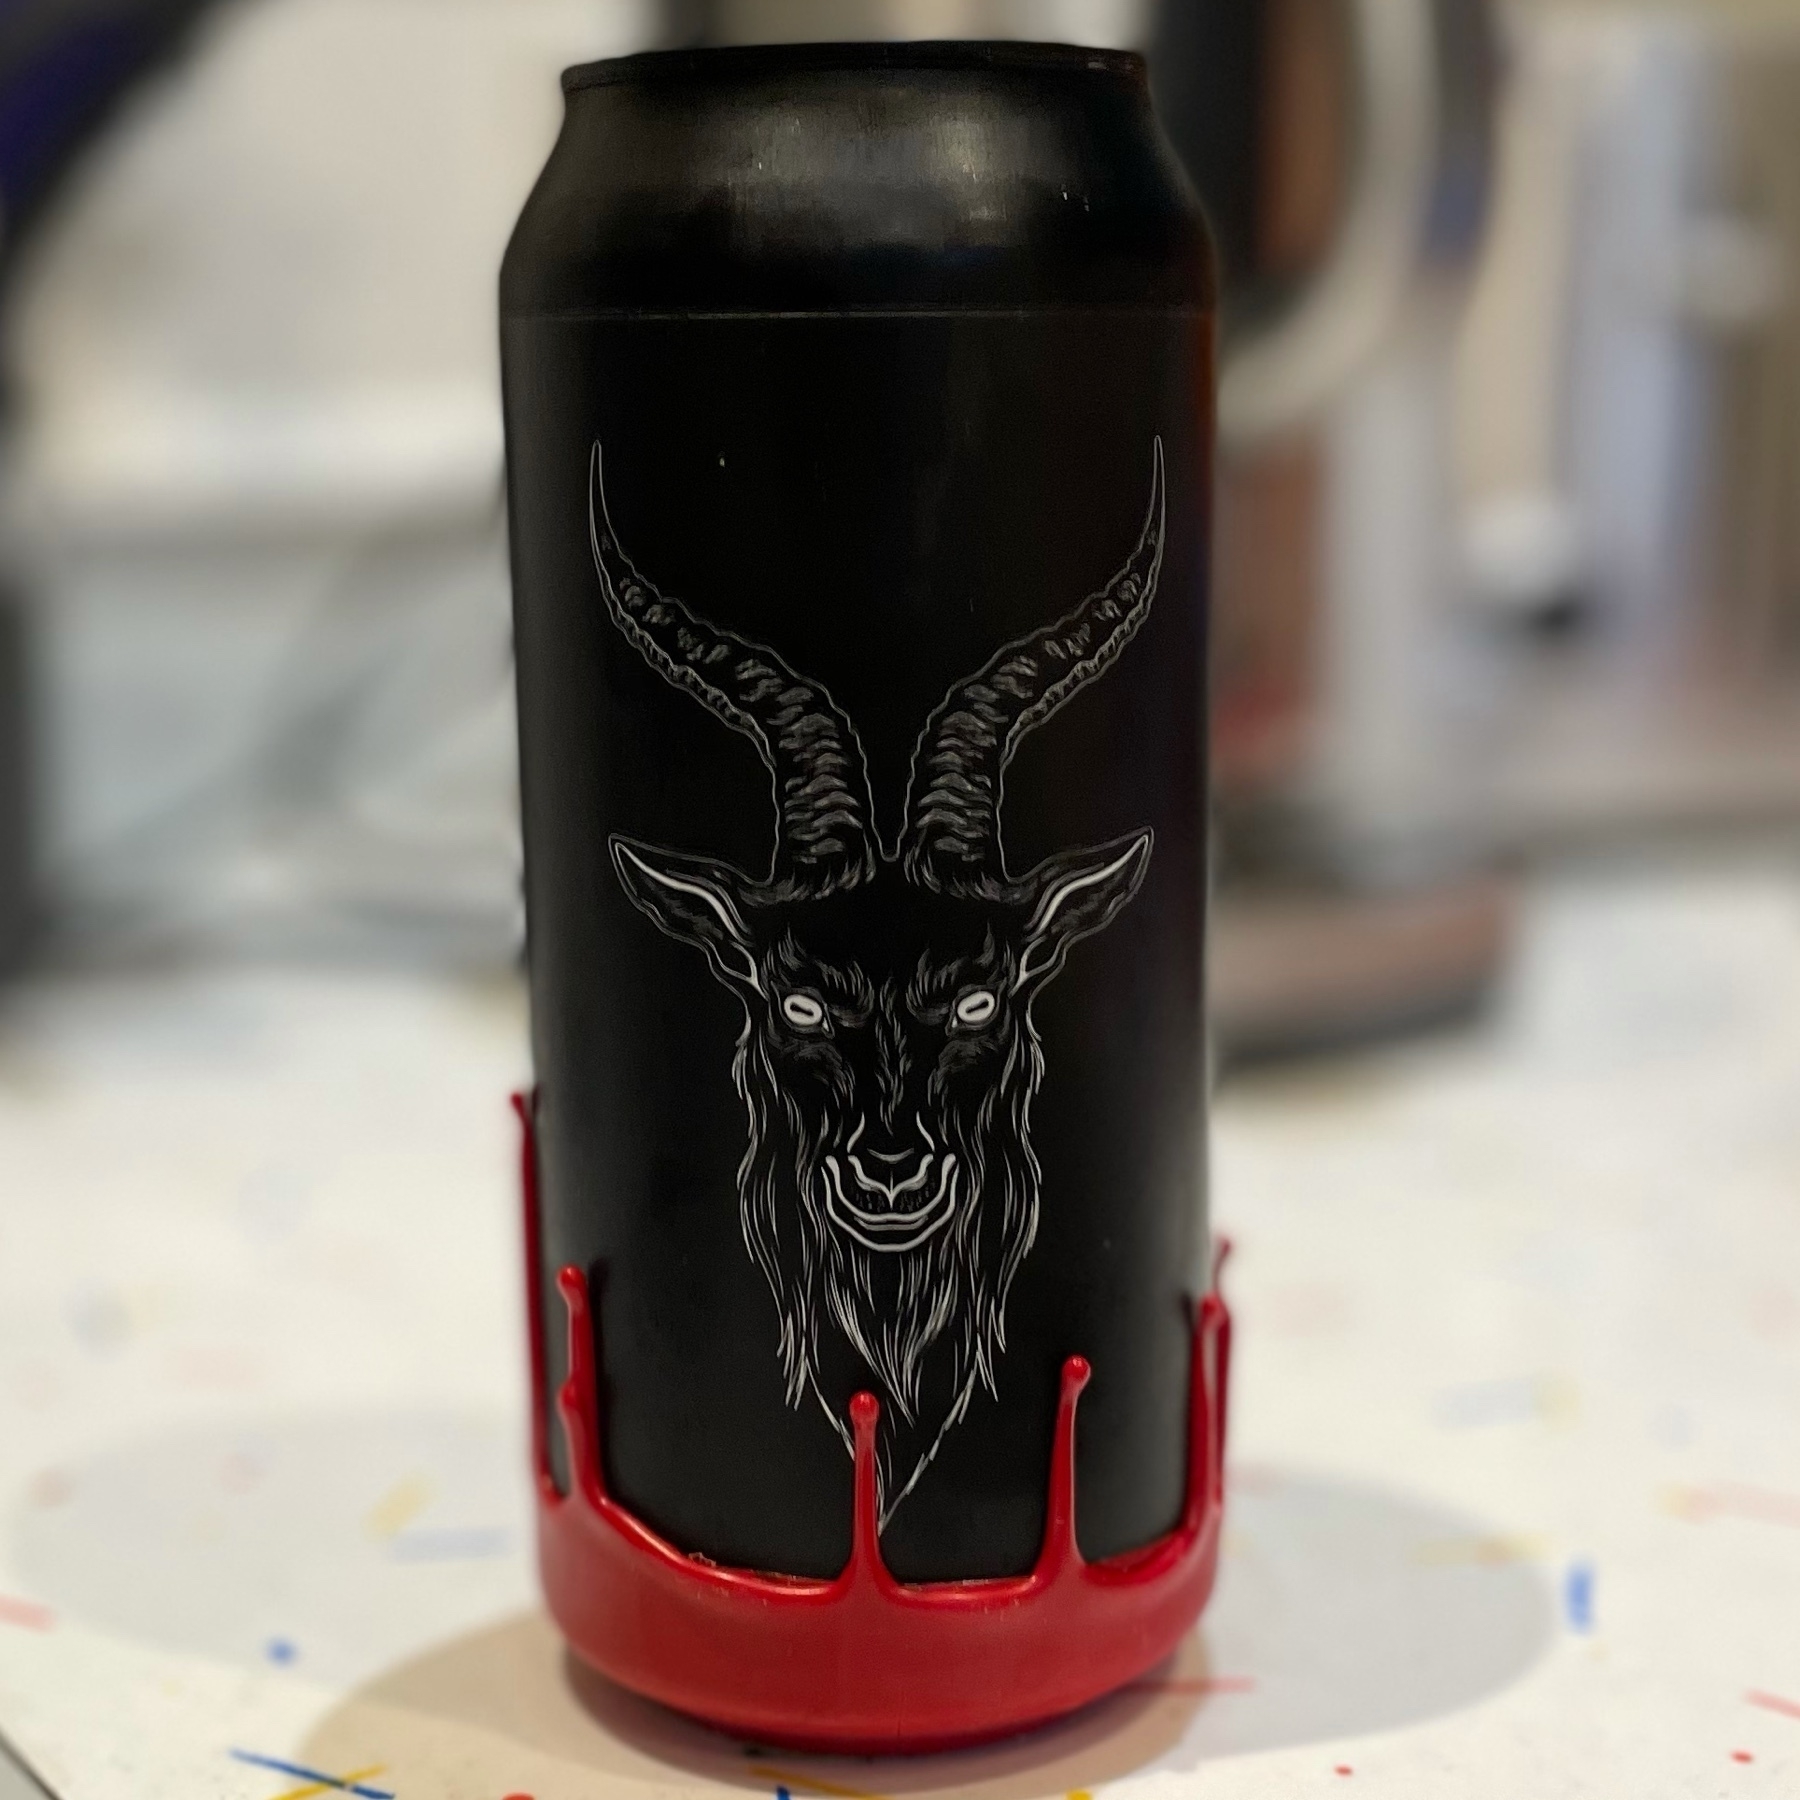 A can of Satan Satan Satan by Maltkult and Smallgods